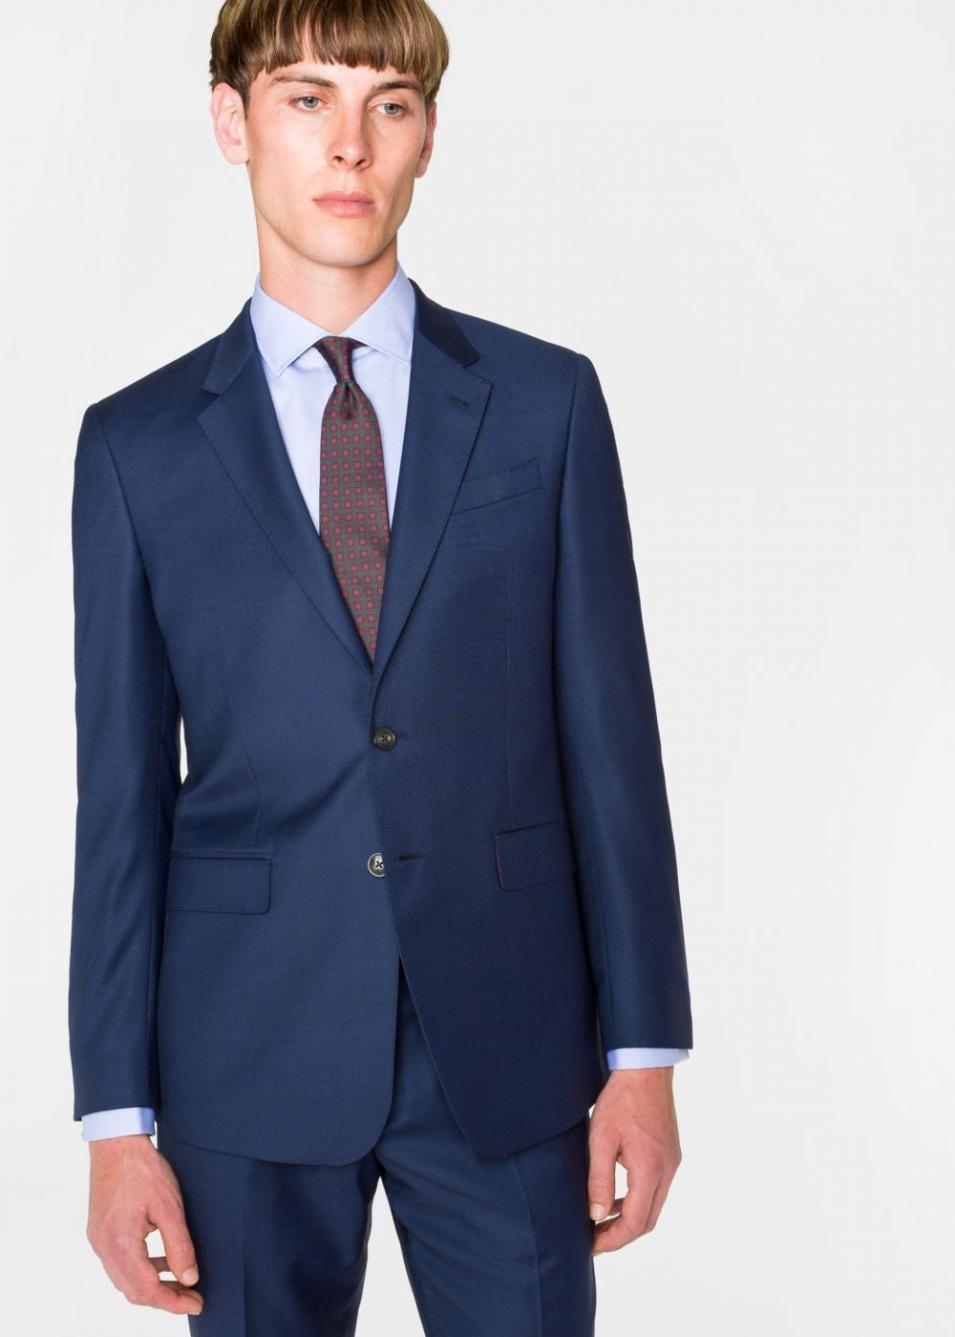 Paul Smith Suit LONDON BYARD Tailored Fit UK44R EU54R RRP £725 